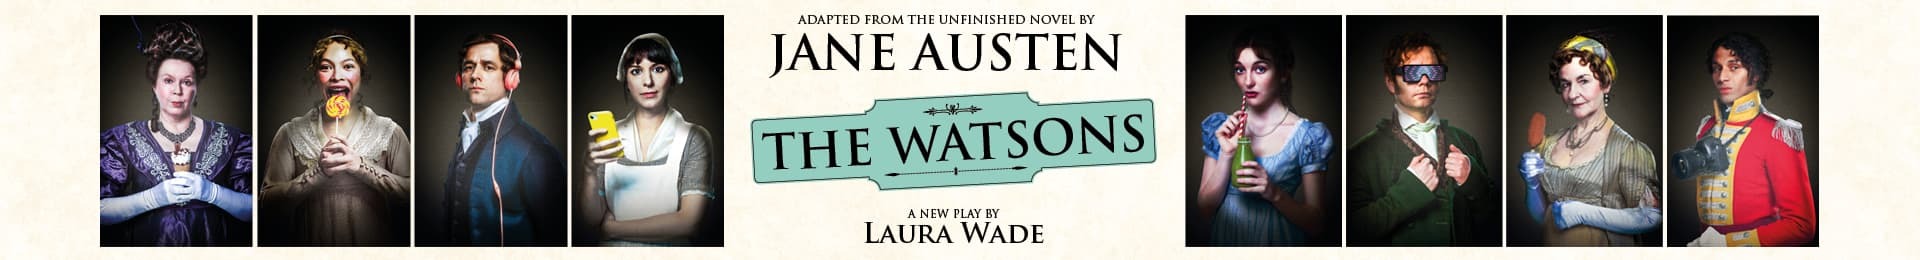 The Watsons - header